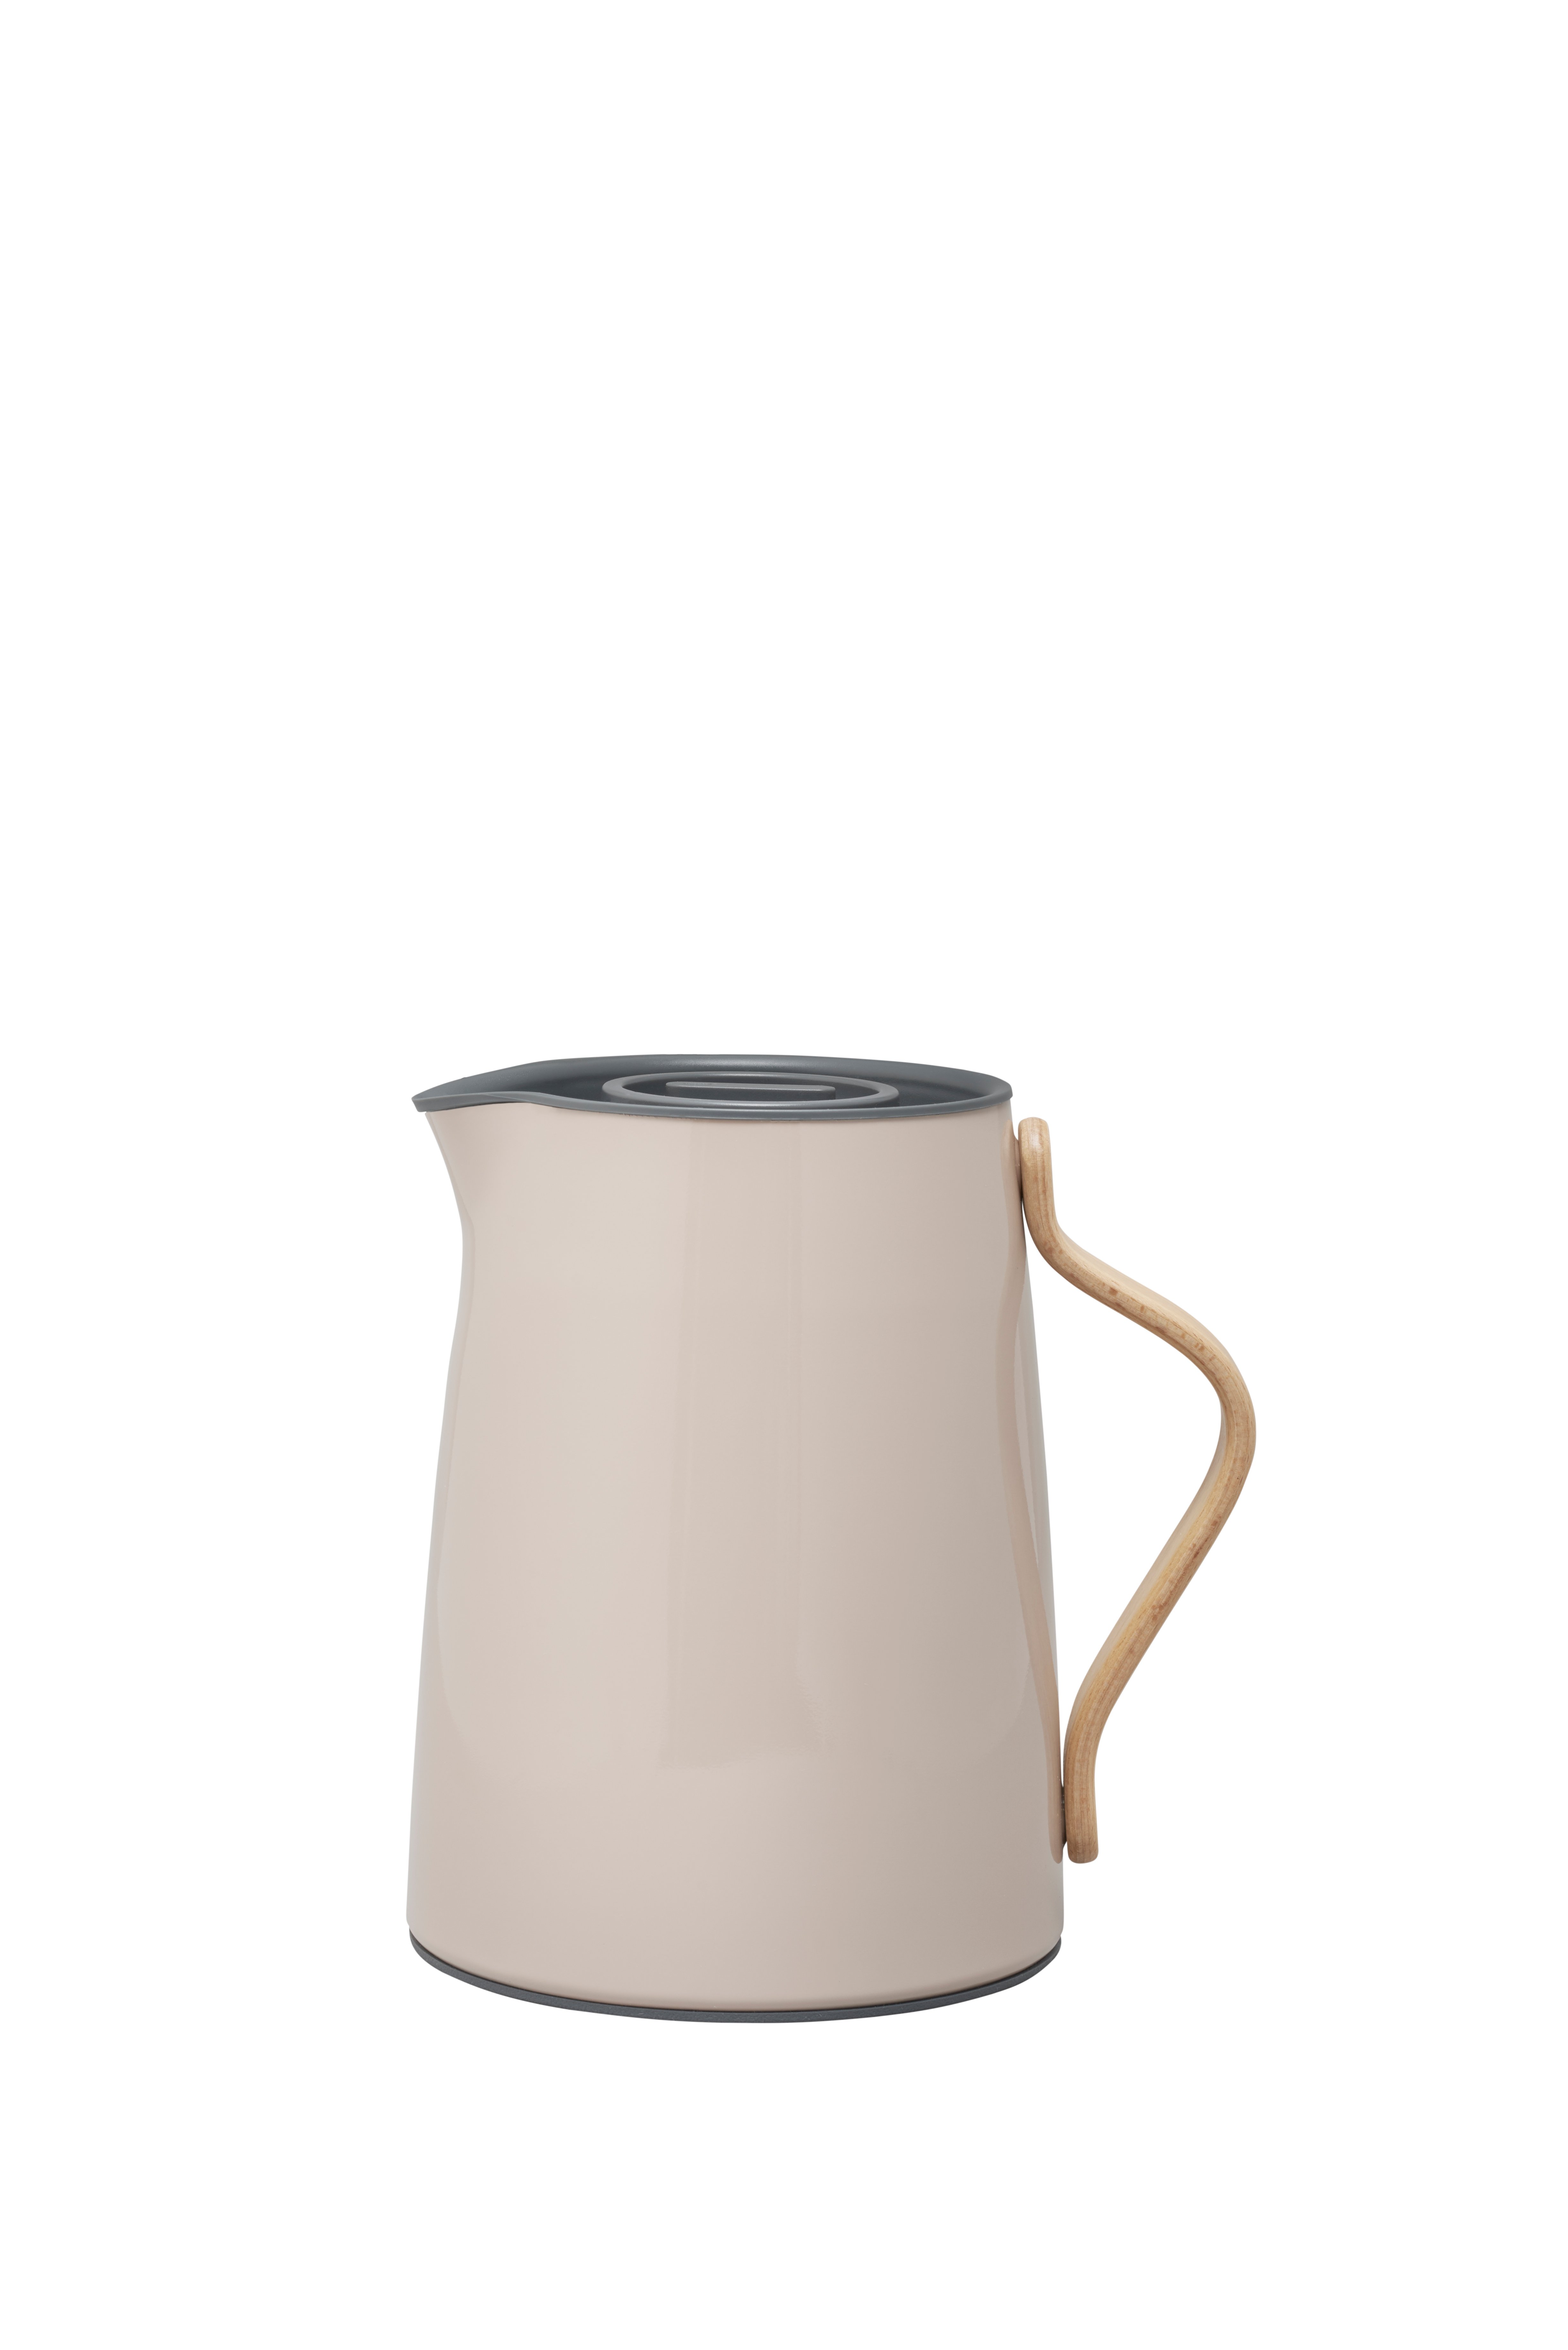 Koop Stelton - Vaccum Jug Tea 1 L - Nude (x-201-4)